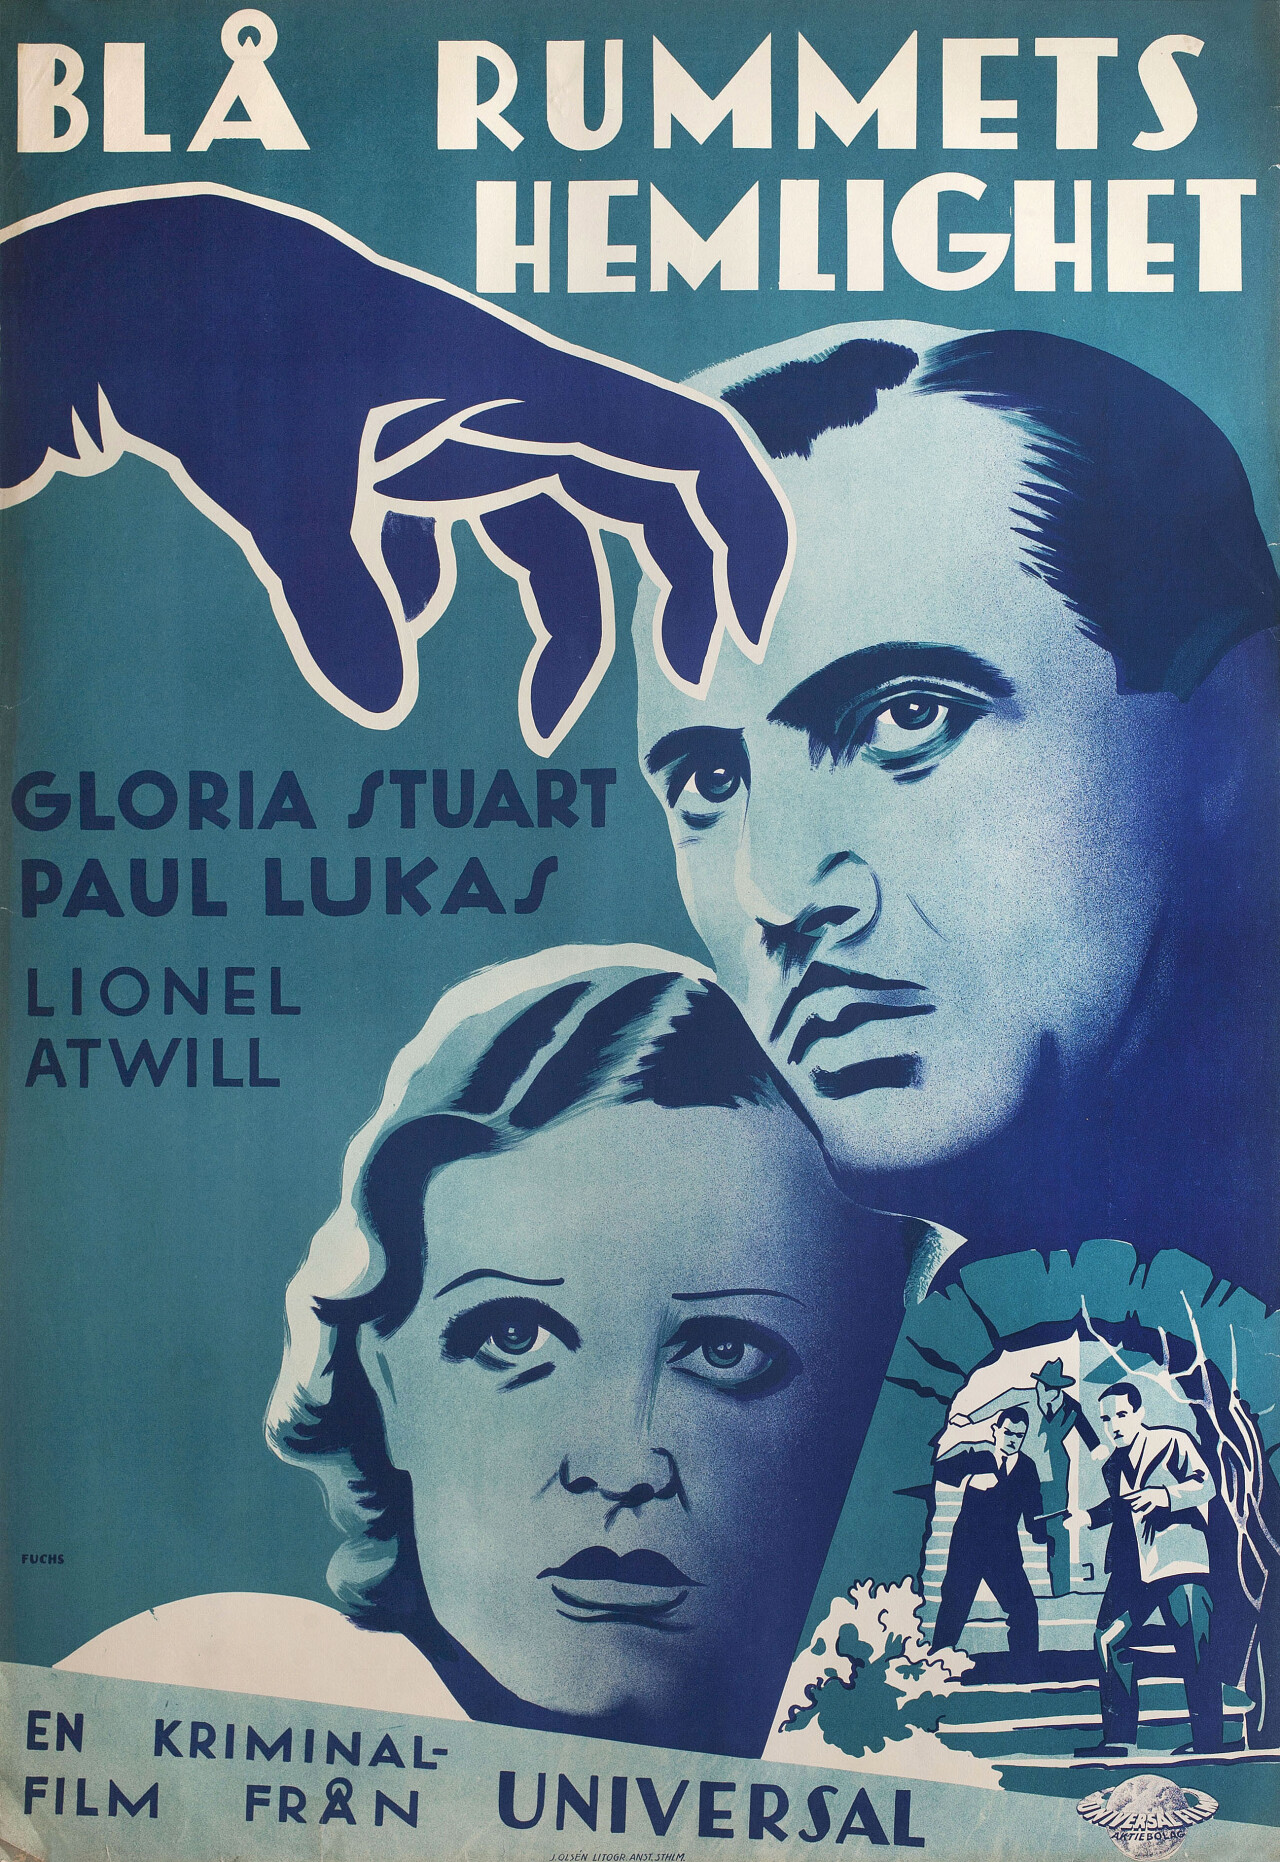 Тайна Голубой комнаты (Secret of the Blue Room, 1933), режиссёр Курт Нойманн, шведский постер к фильму, автор Уолтер Фукс (ужасы, 1933 год)